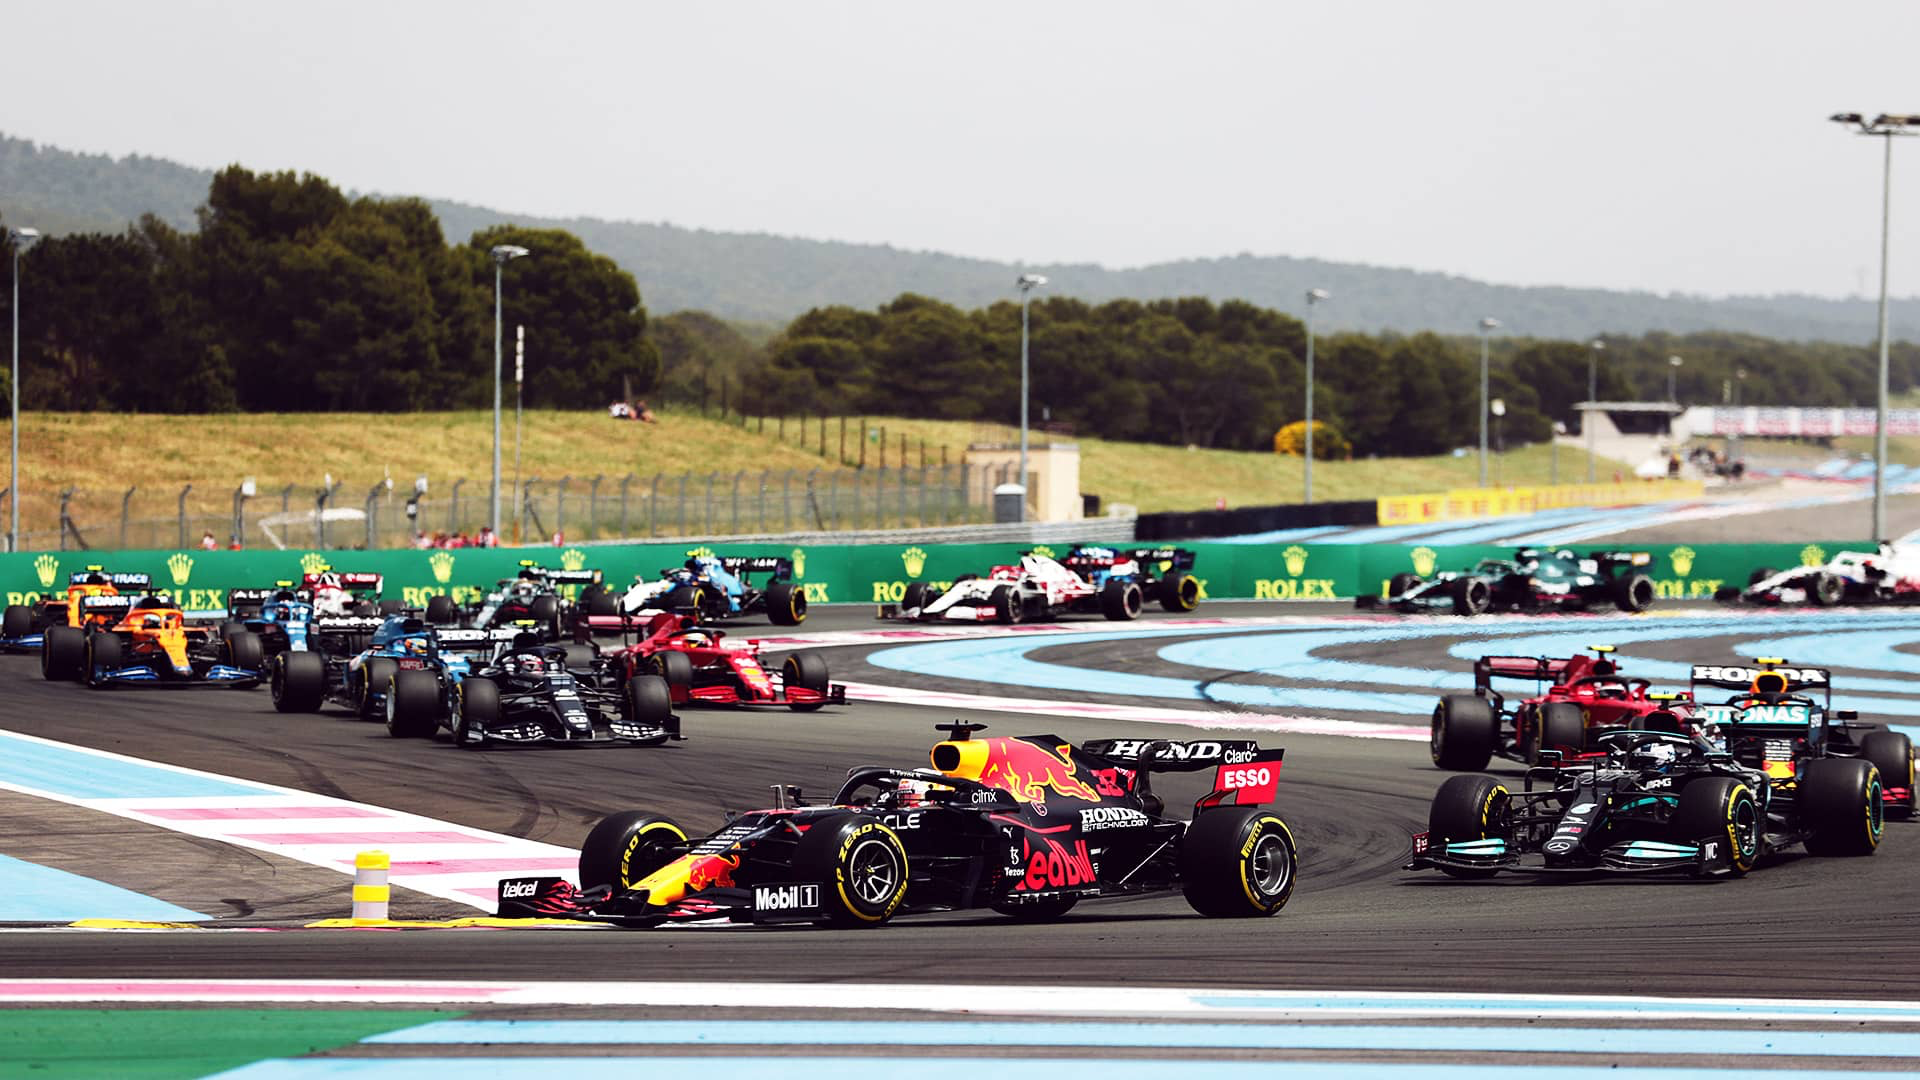 F1 - CIrcuit Paul Ricard - French Grand Prix